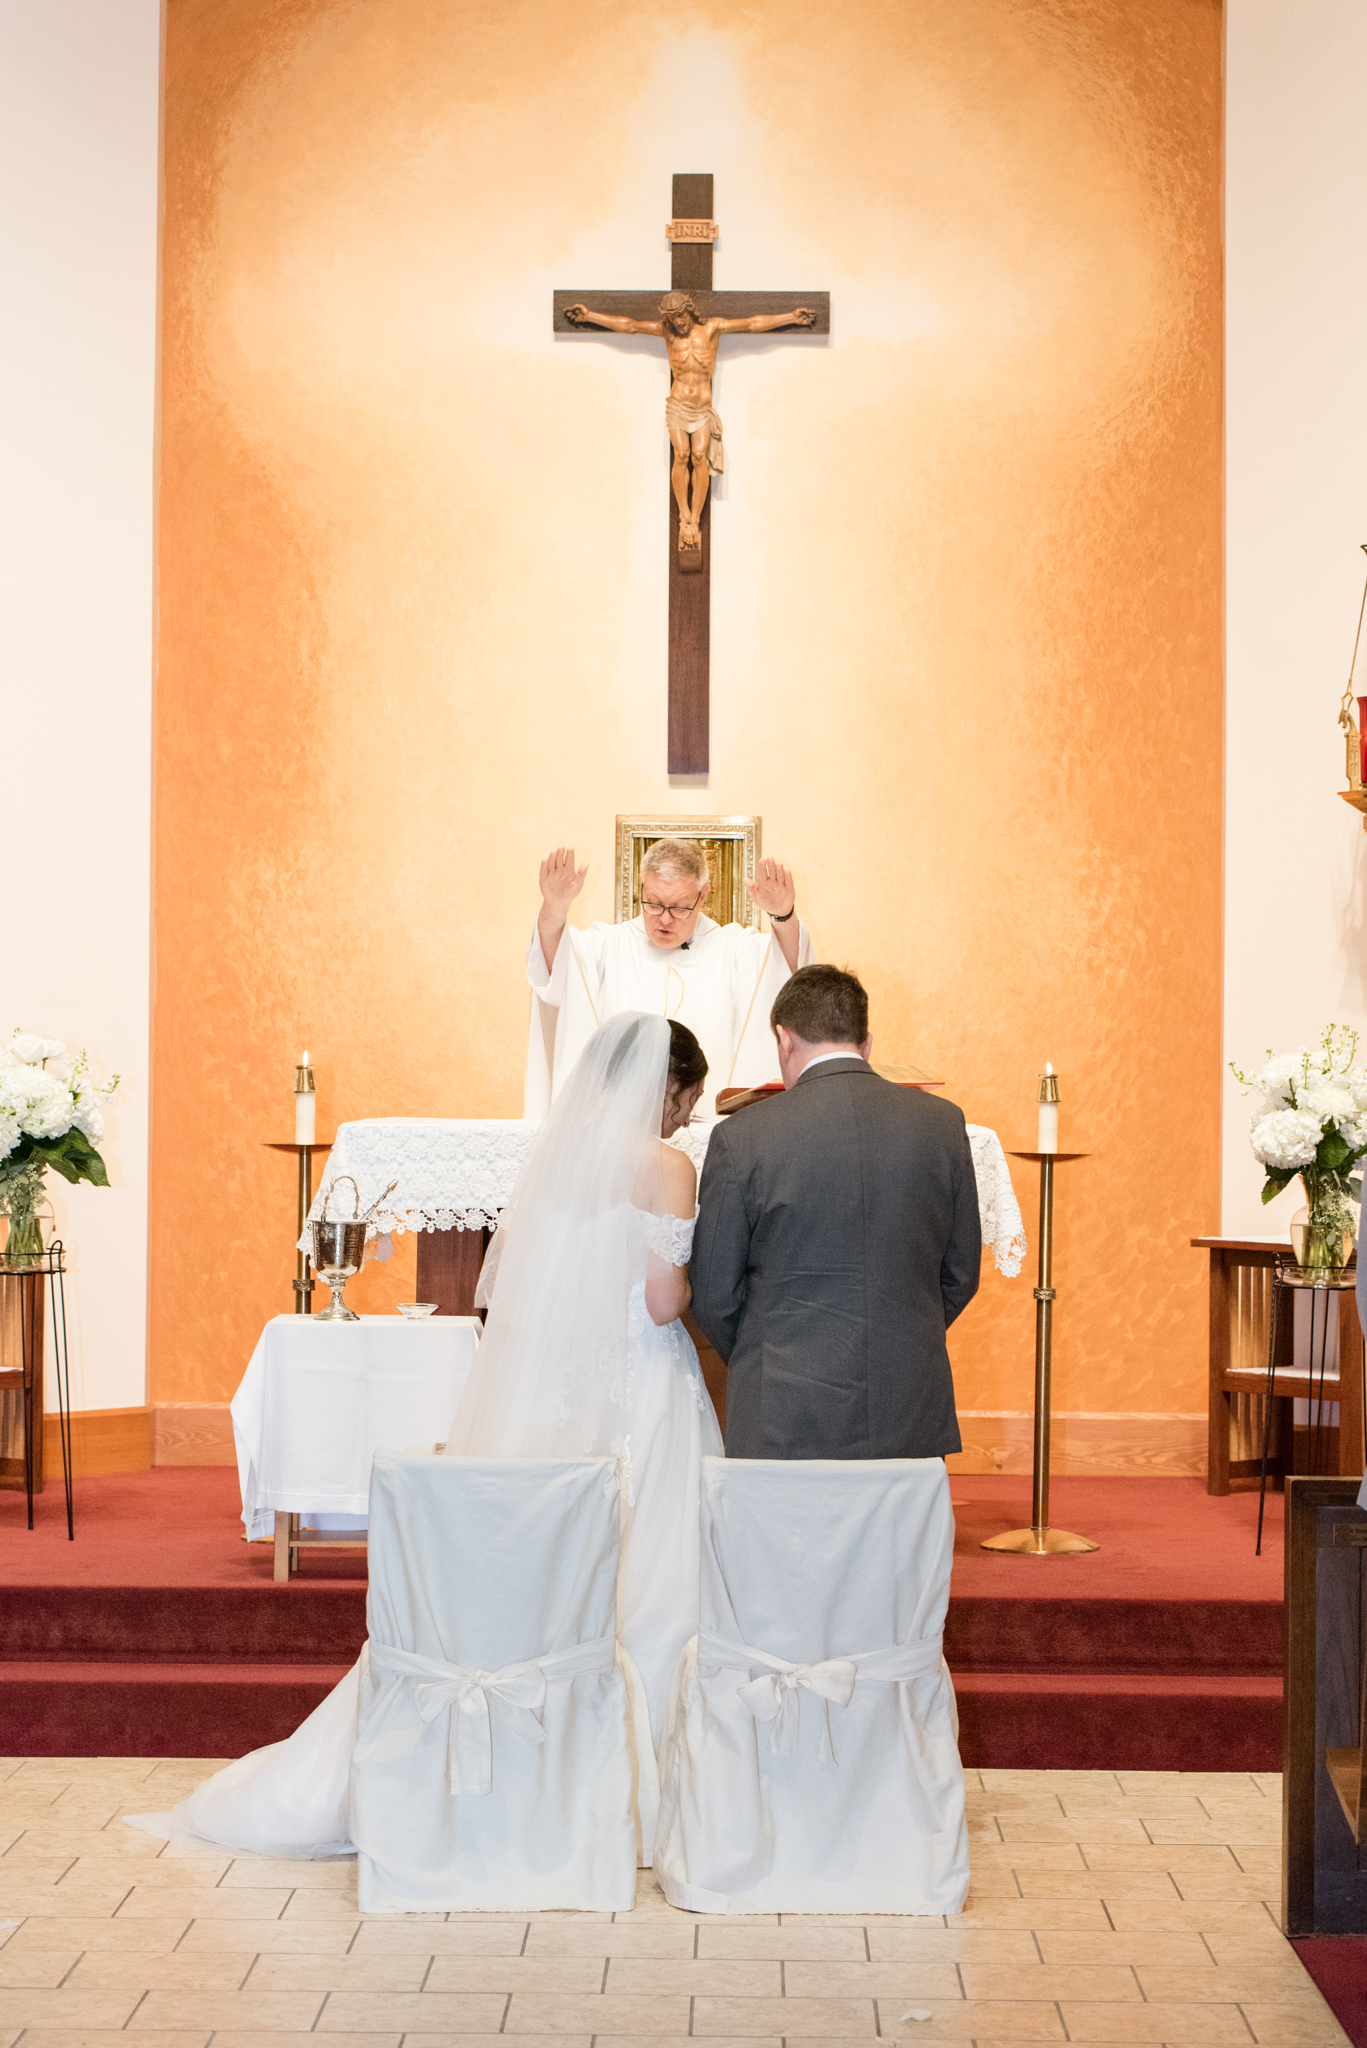 Bride and groom pray at wedding ceremony.